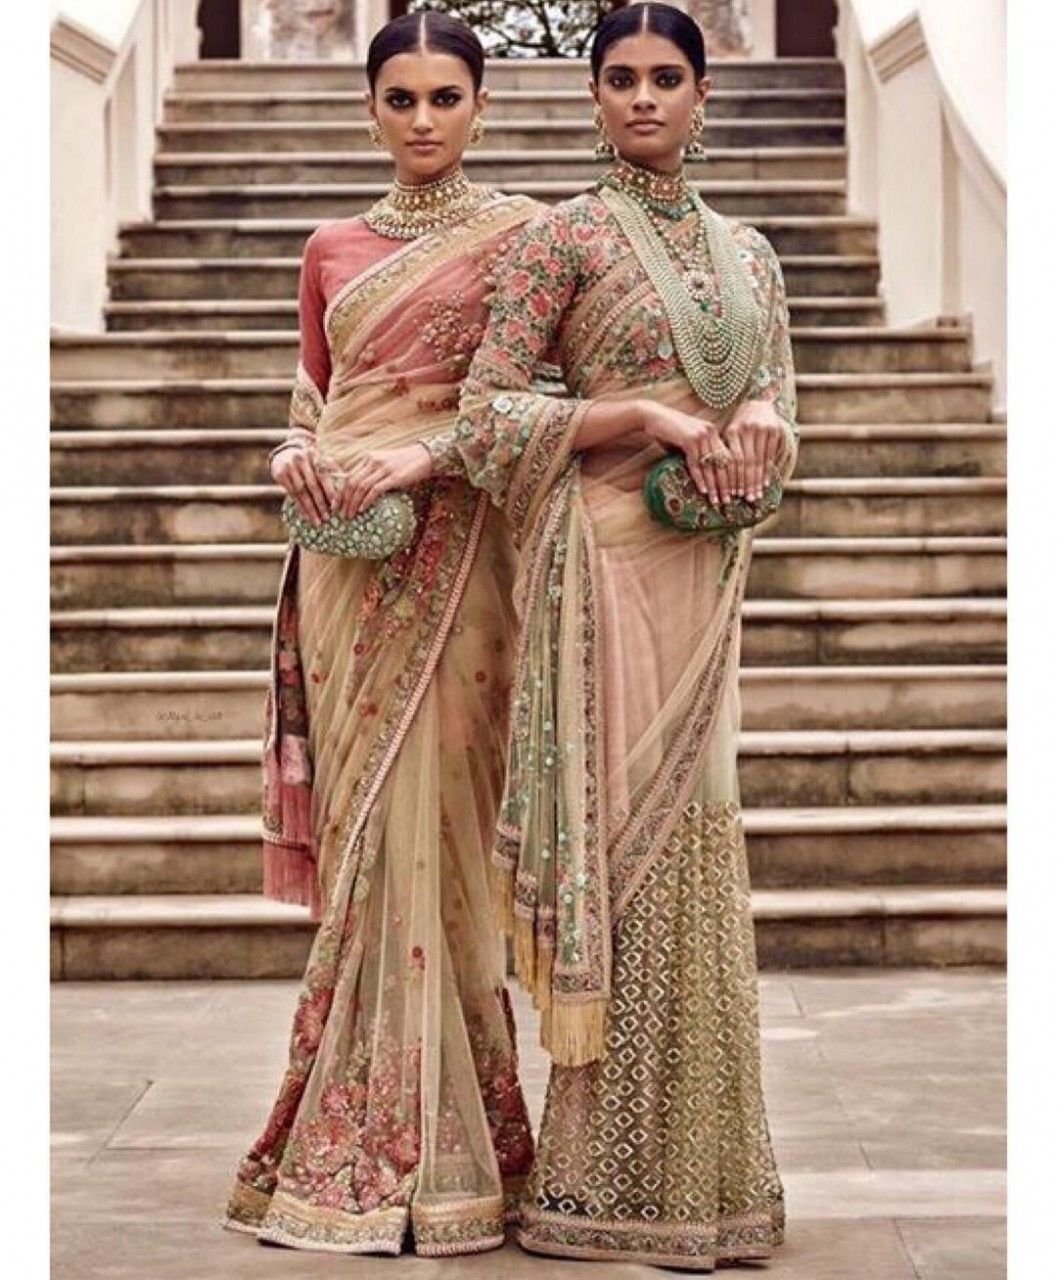 Одежда индии сари. Сабьясачи Мукхерджи. Сабьясачи Мукхерджи Сари. Индийская одежда бренда Sabyasachi. Сари (женская одежда в Индии).